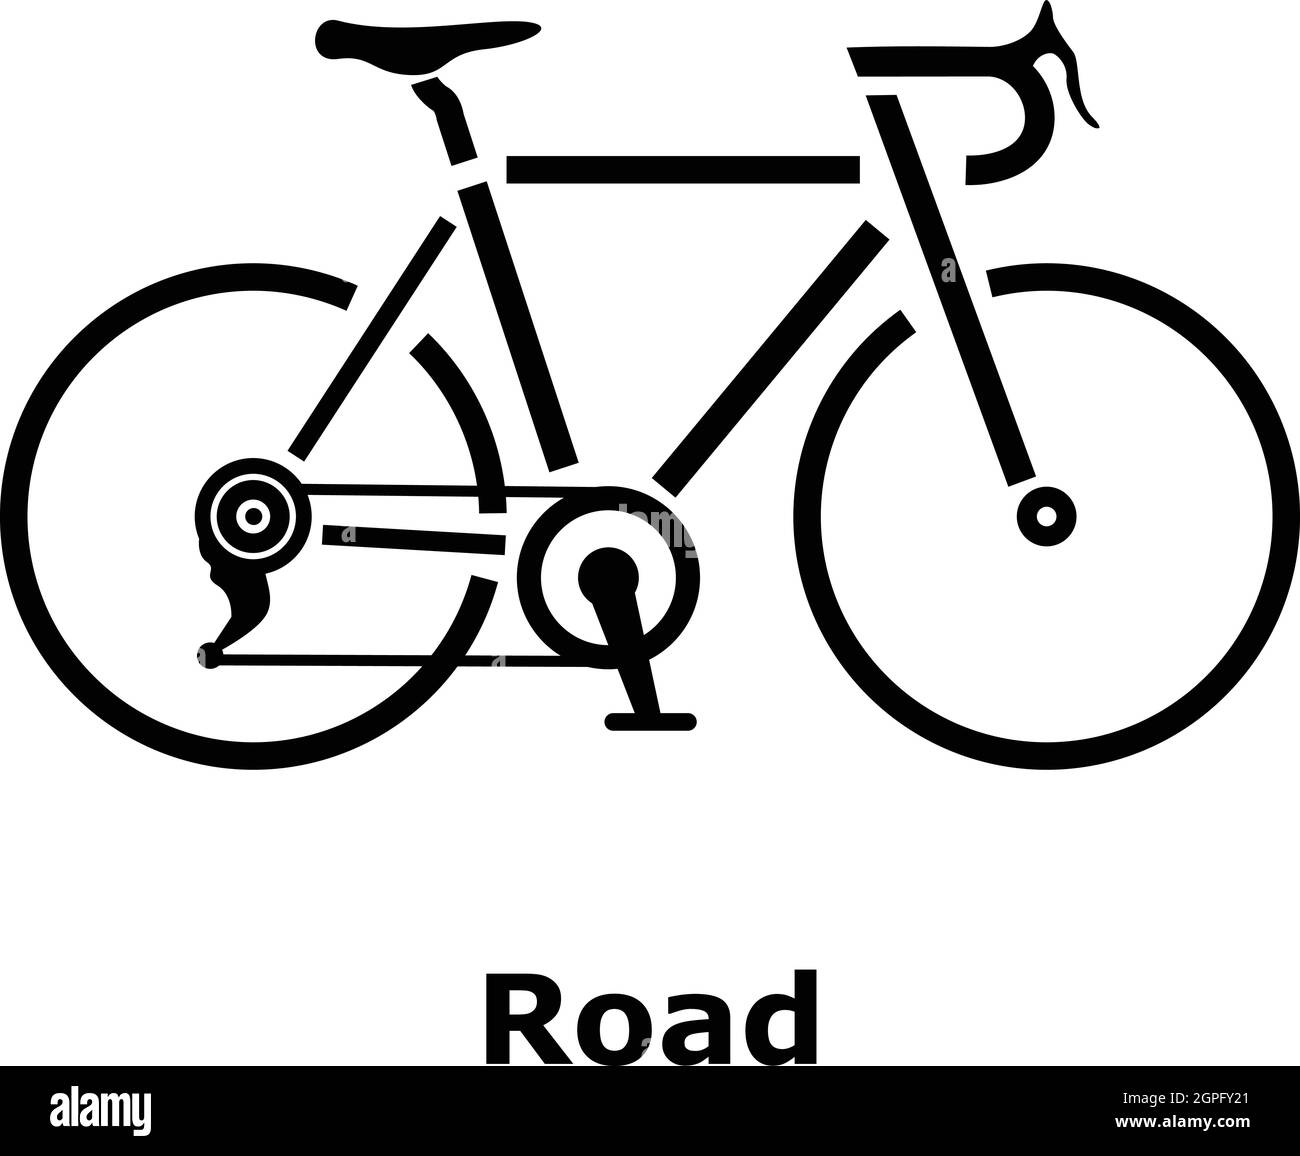 Simple Bike Outline Silhouette Bicycle Biking SVG PNG DXF Vector Graphic  Cut File Digital Design Clip Art Mountain Bike Road Bike Fixed Gear |  islamiyyat.com